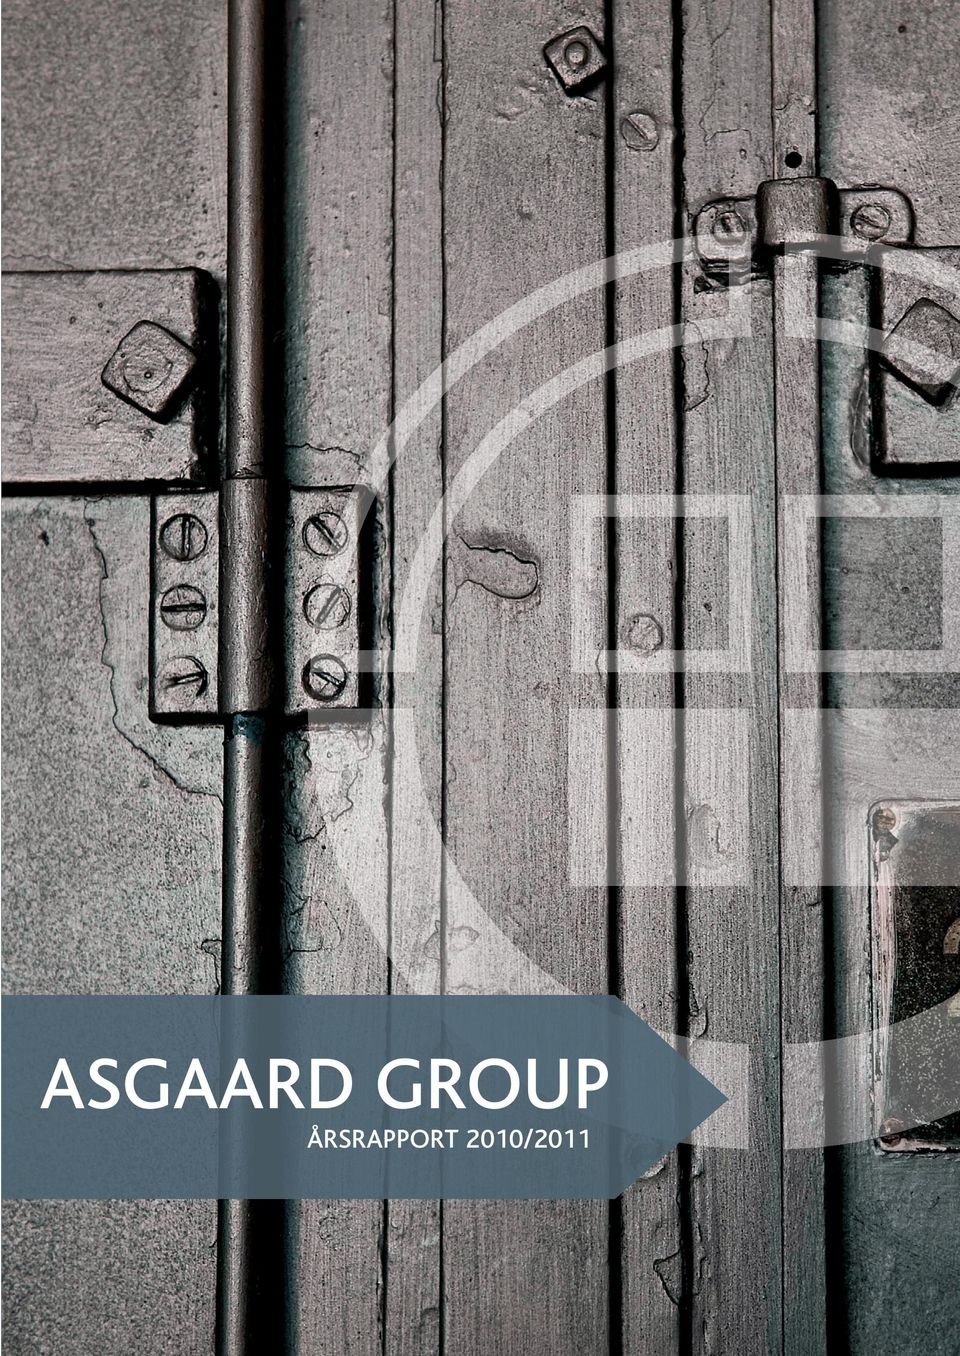 Denmark info@asgaardgroup.com www.asgaardgroup.com WWW.GGP.